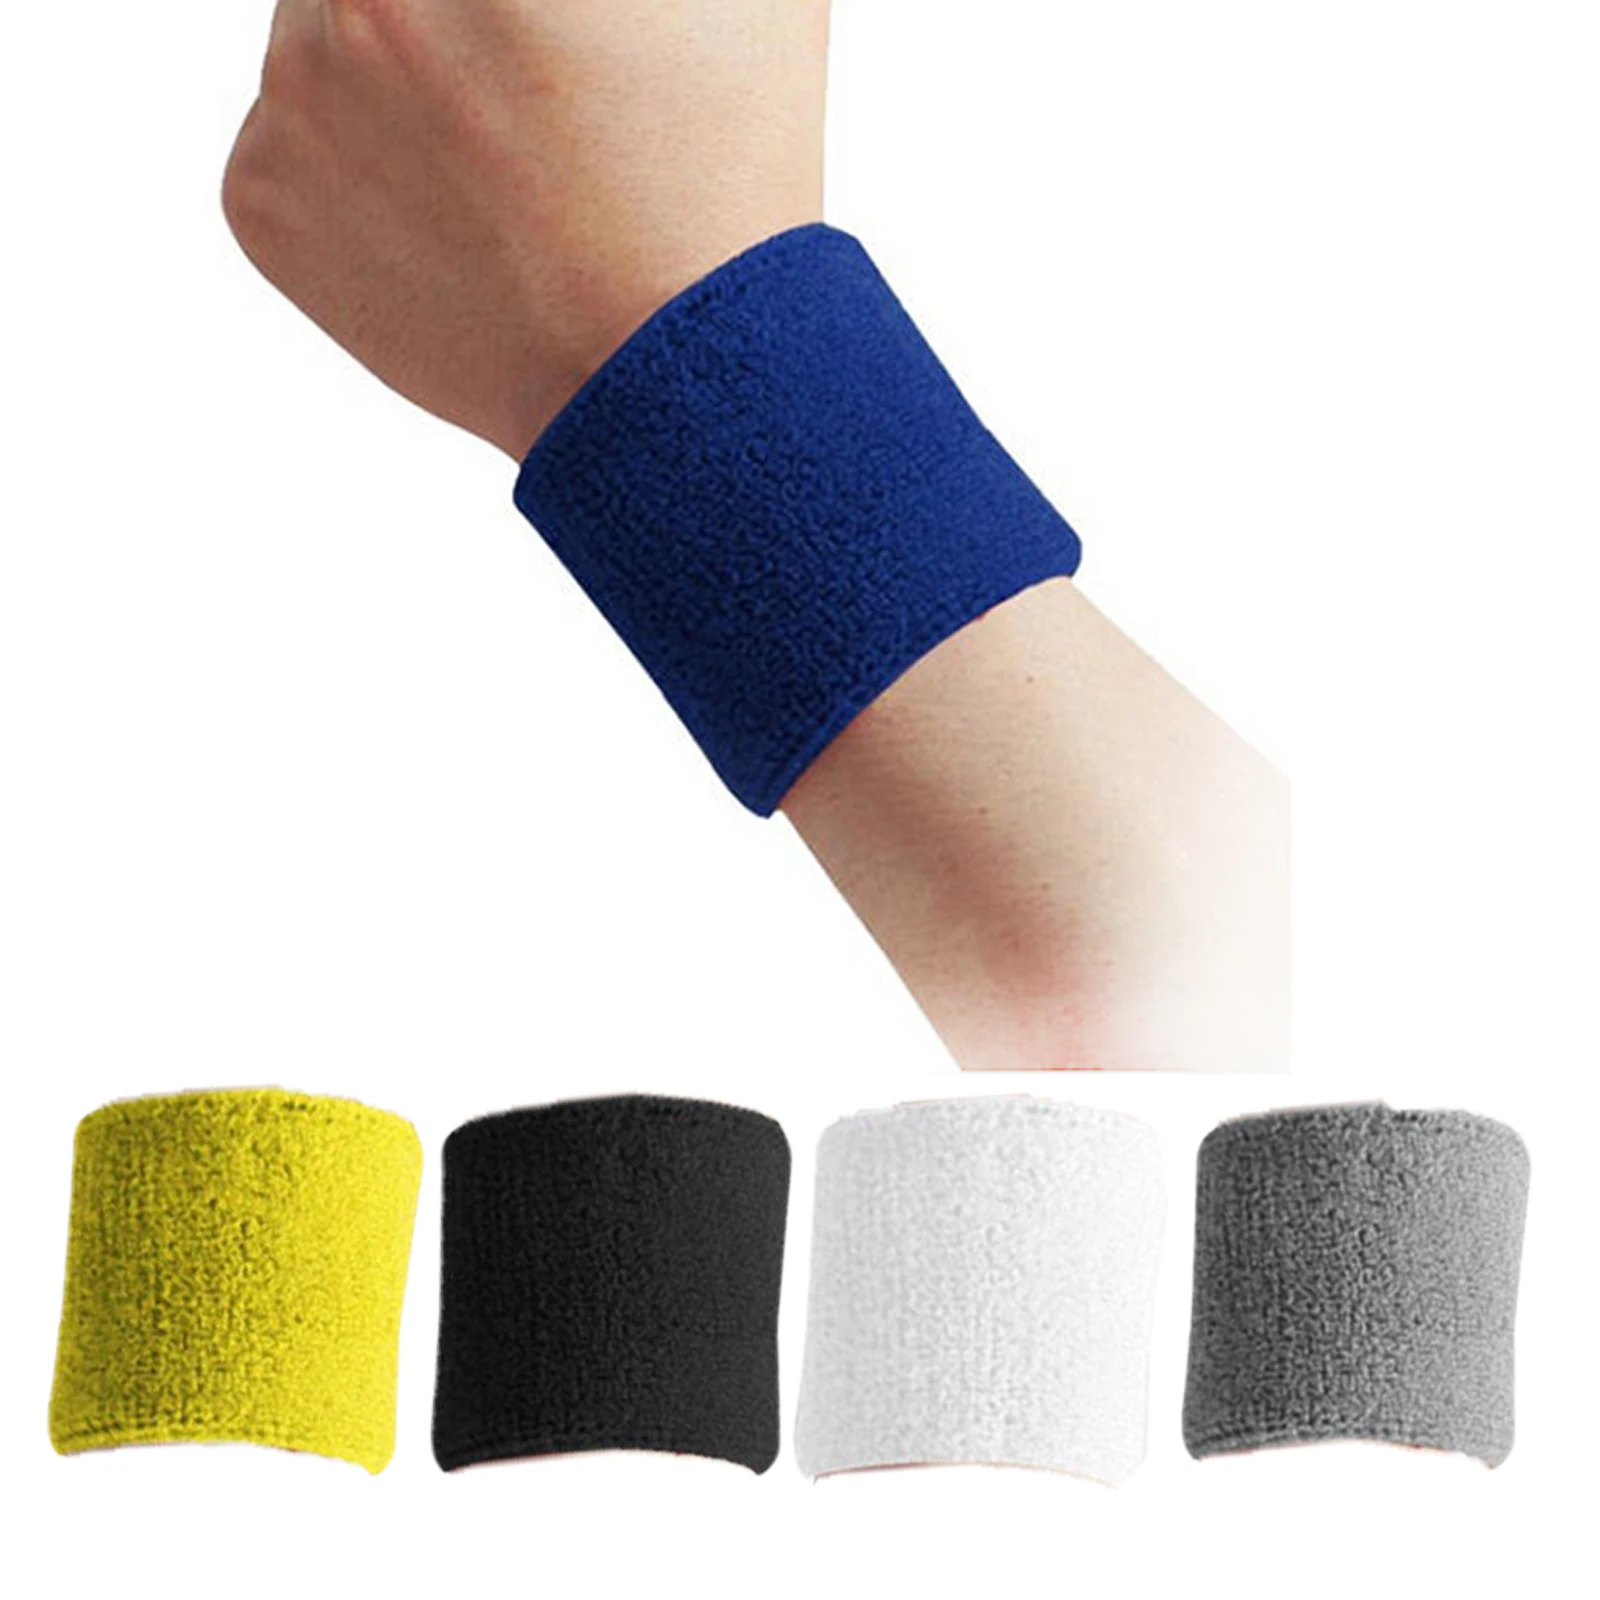 

1PC Cotton Wristbands Sport Sweatband Hand Band Sweat Wrist Support Brace Wraps Guards Gym Volleyball Basketball